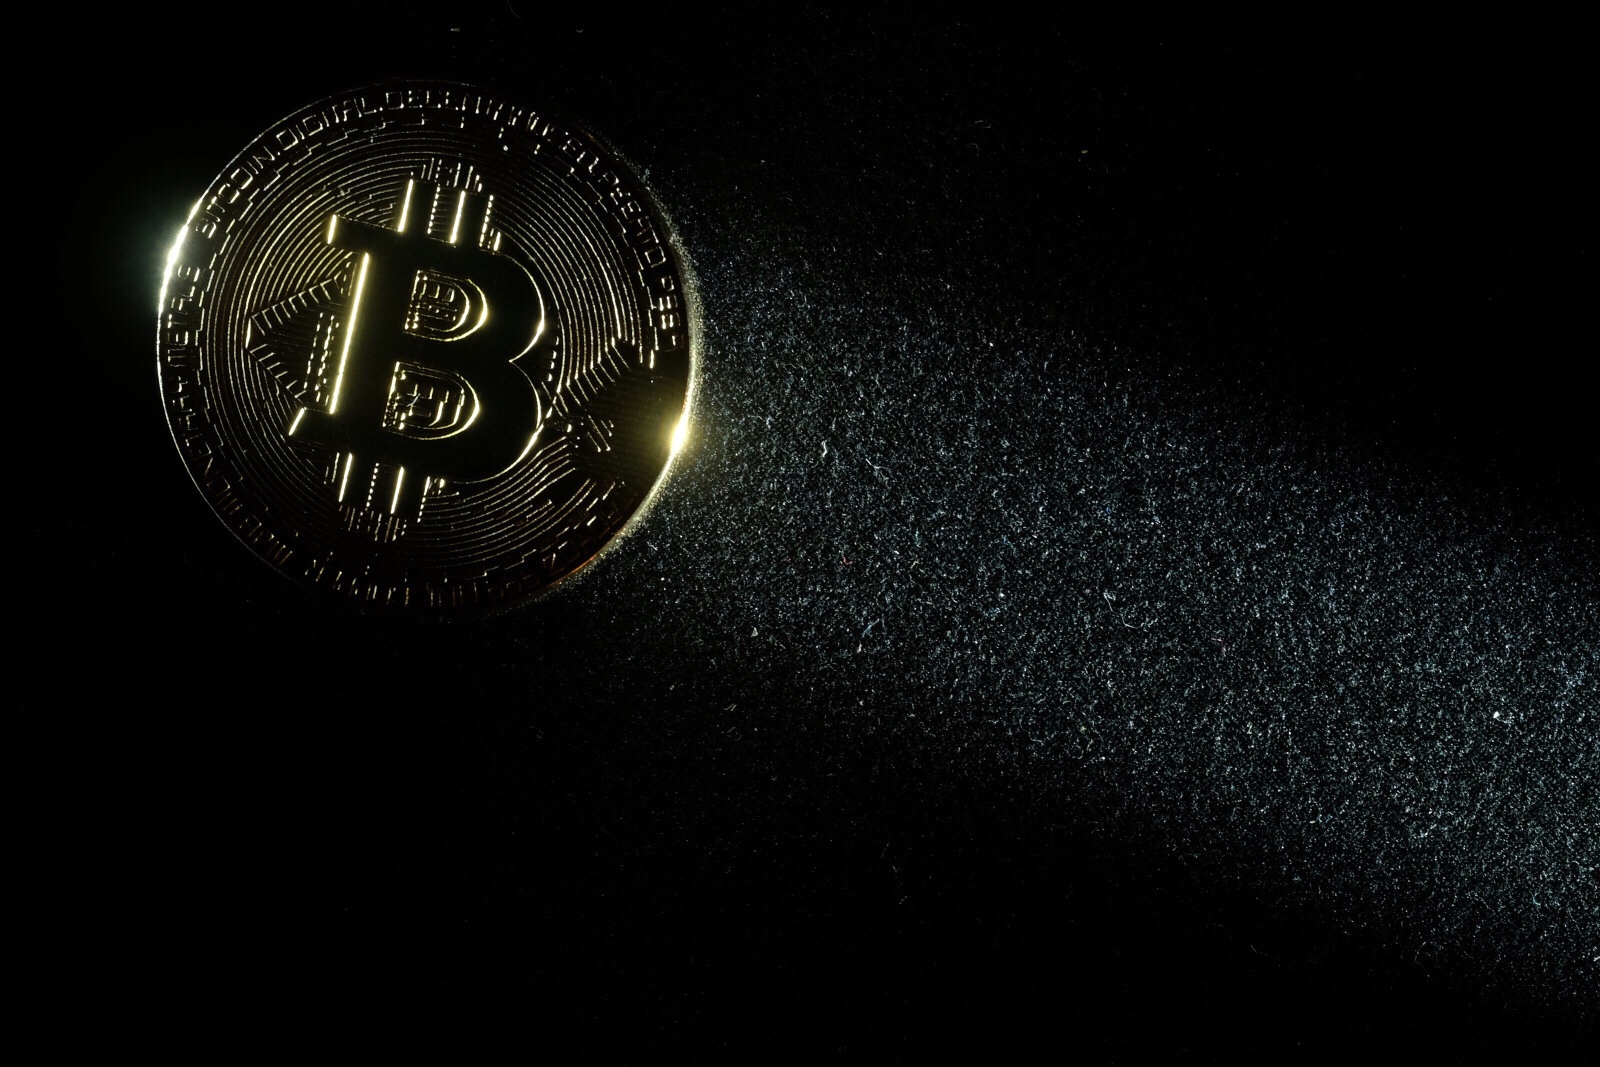 Starting April 23, Stripe will not longer accept bitcoin